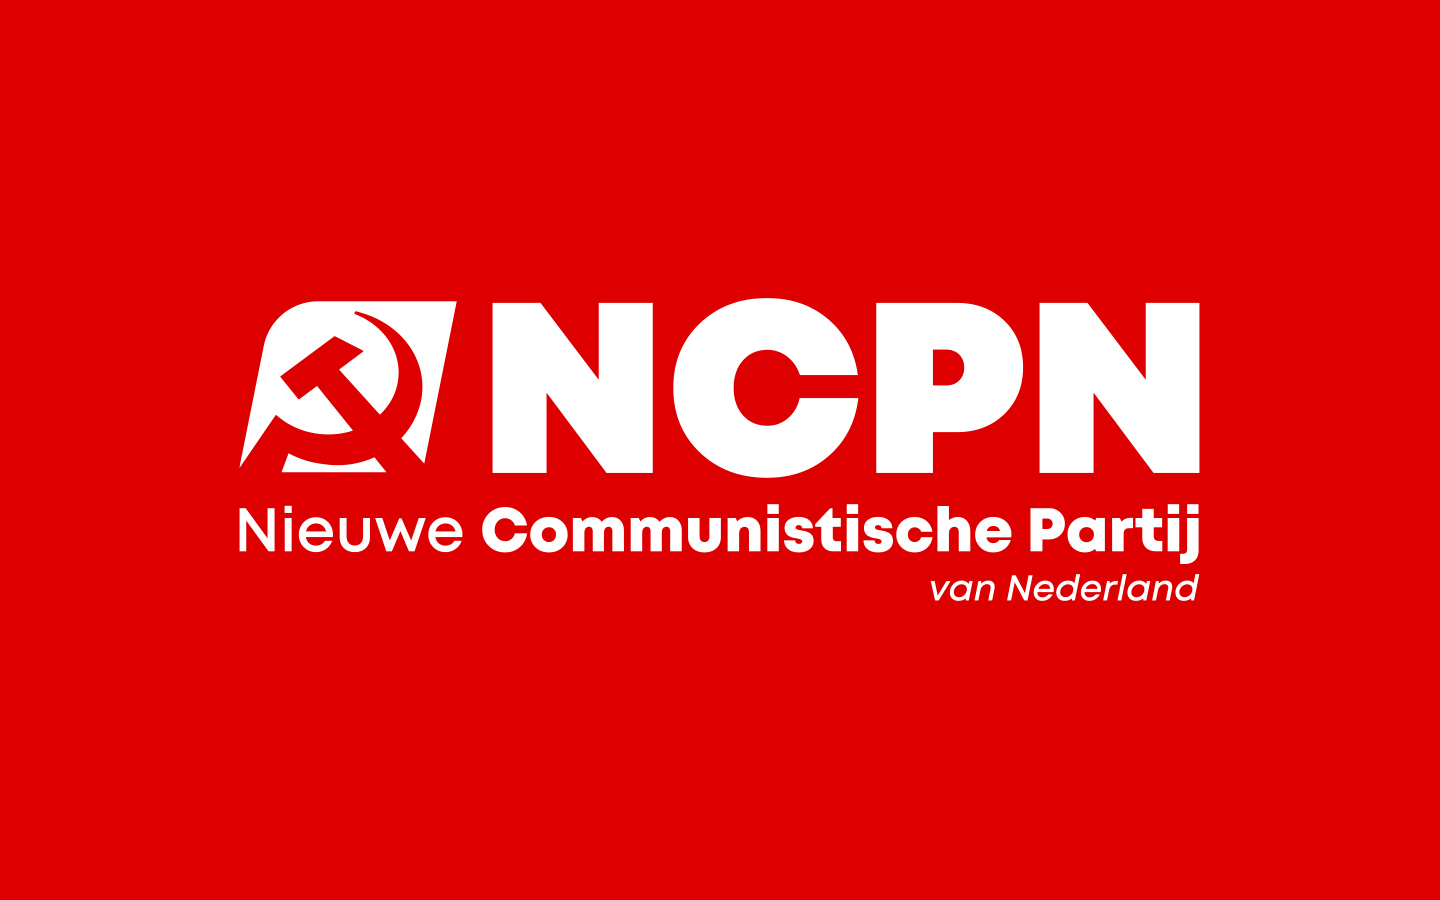 (c) Ncpn.nl